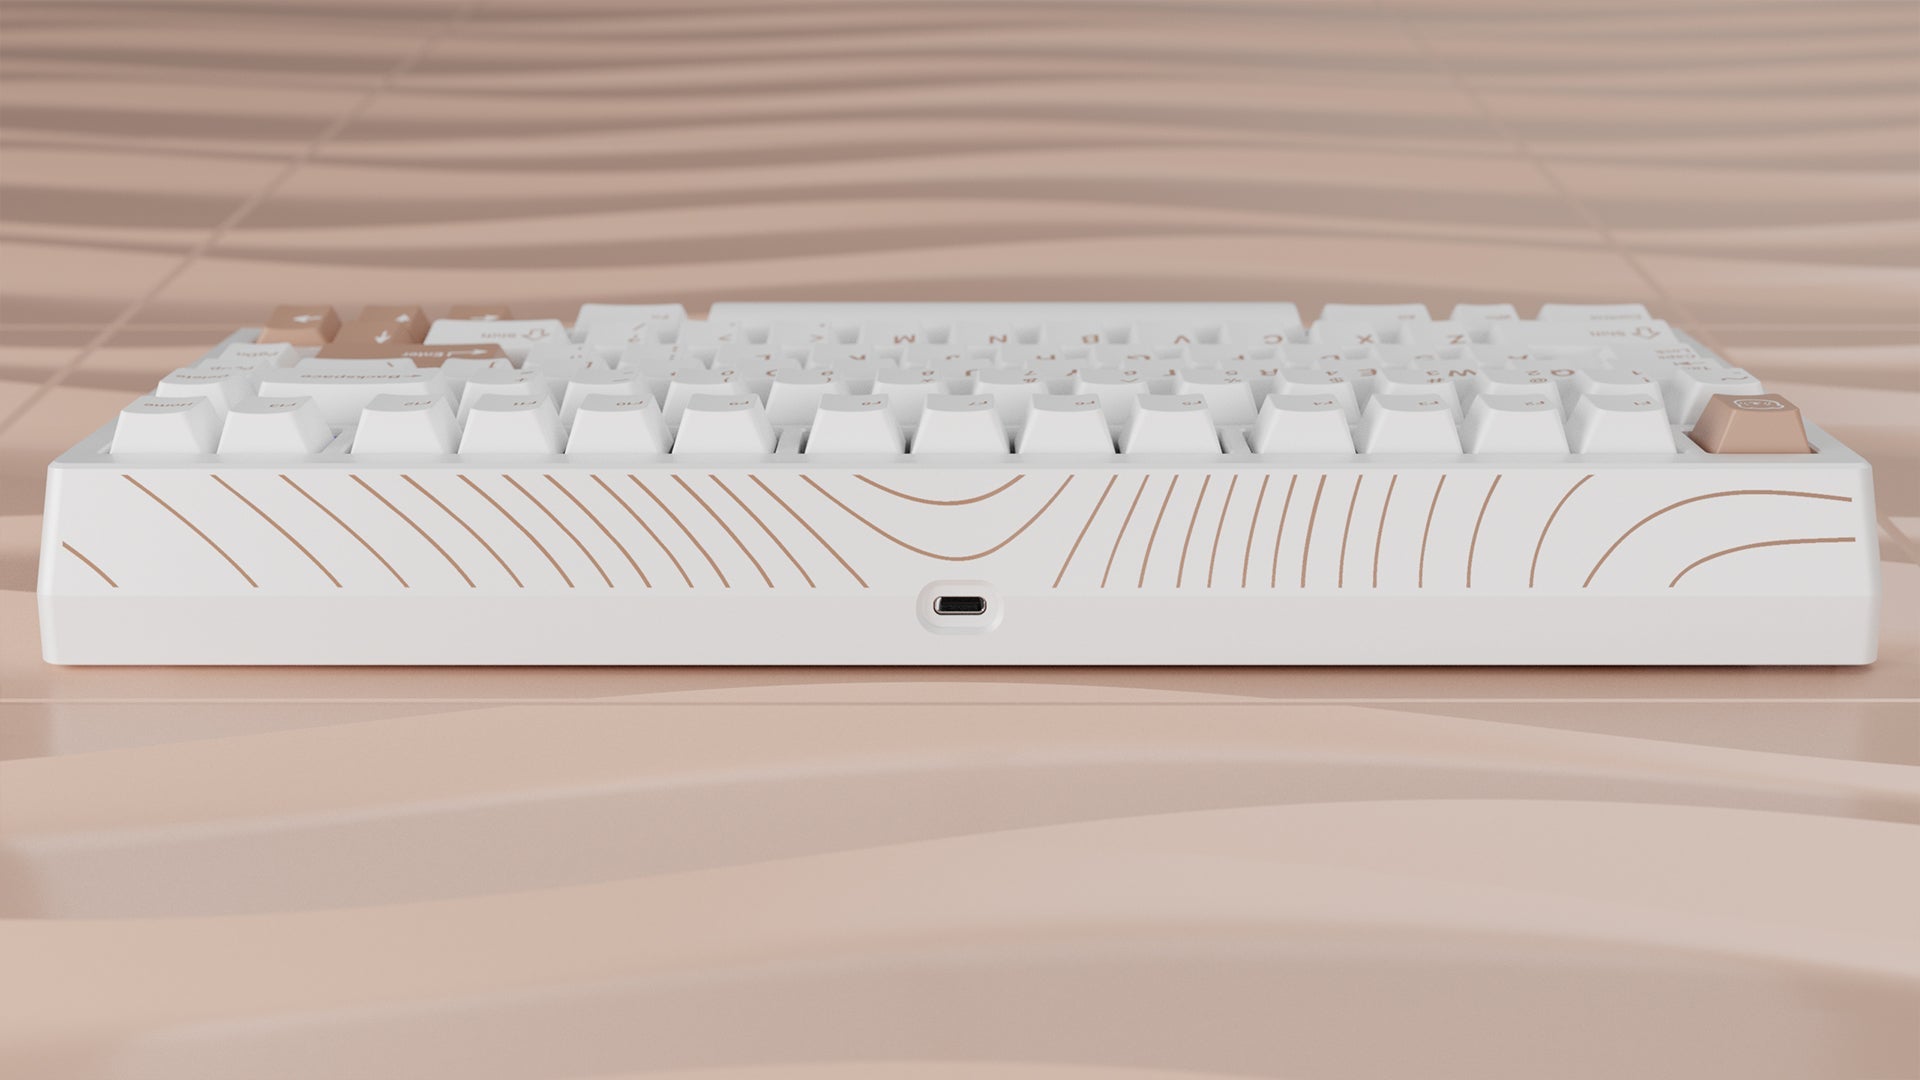 Pre-order] Meletrix Boog75 Pre-built Keyboard